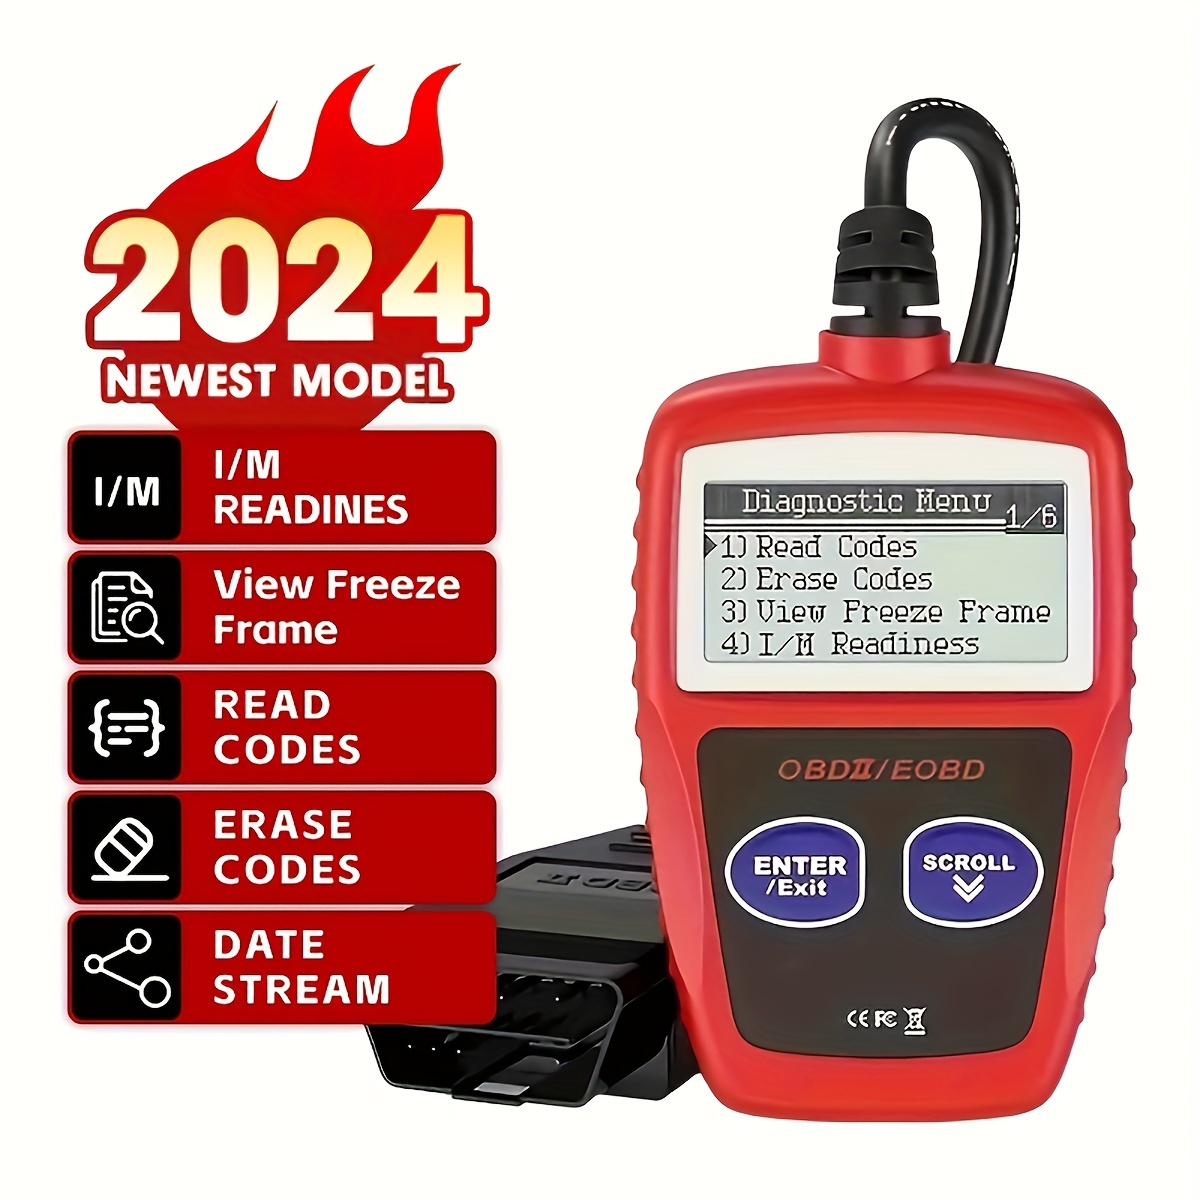 cars diagnostic tool the upgraded version of ms309 obd2 obdii eobd fault code reader scanner tool